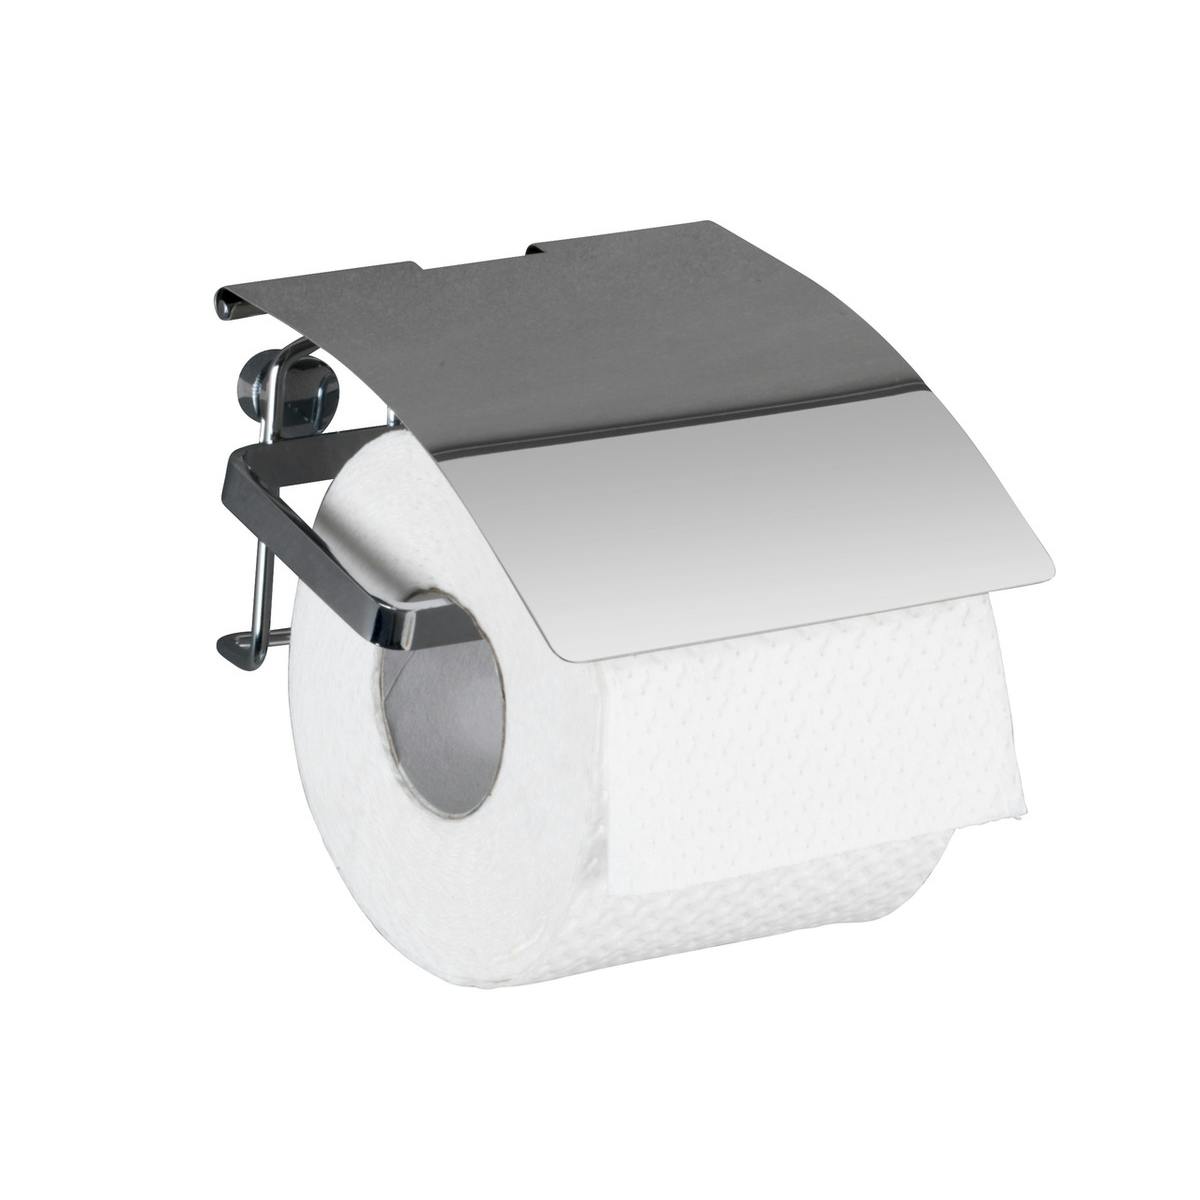 WENKO Toilettenpapierhalter Premium Edelstahl | METRO Marktplatz